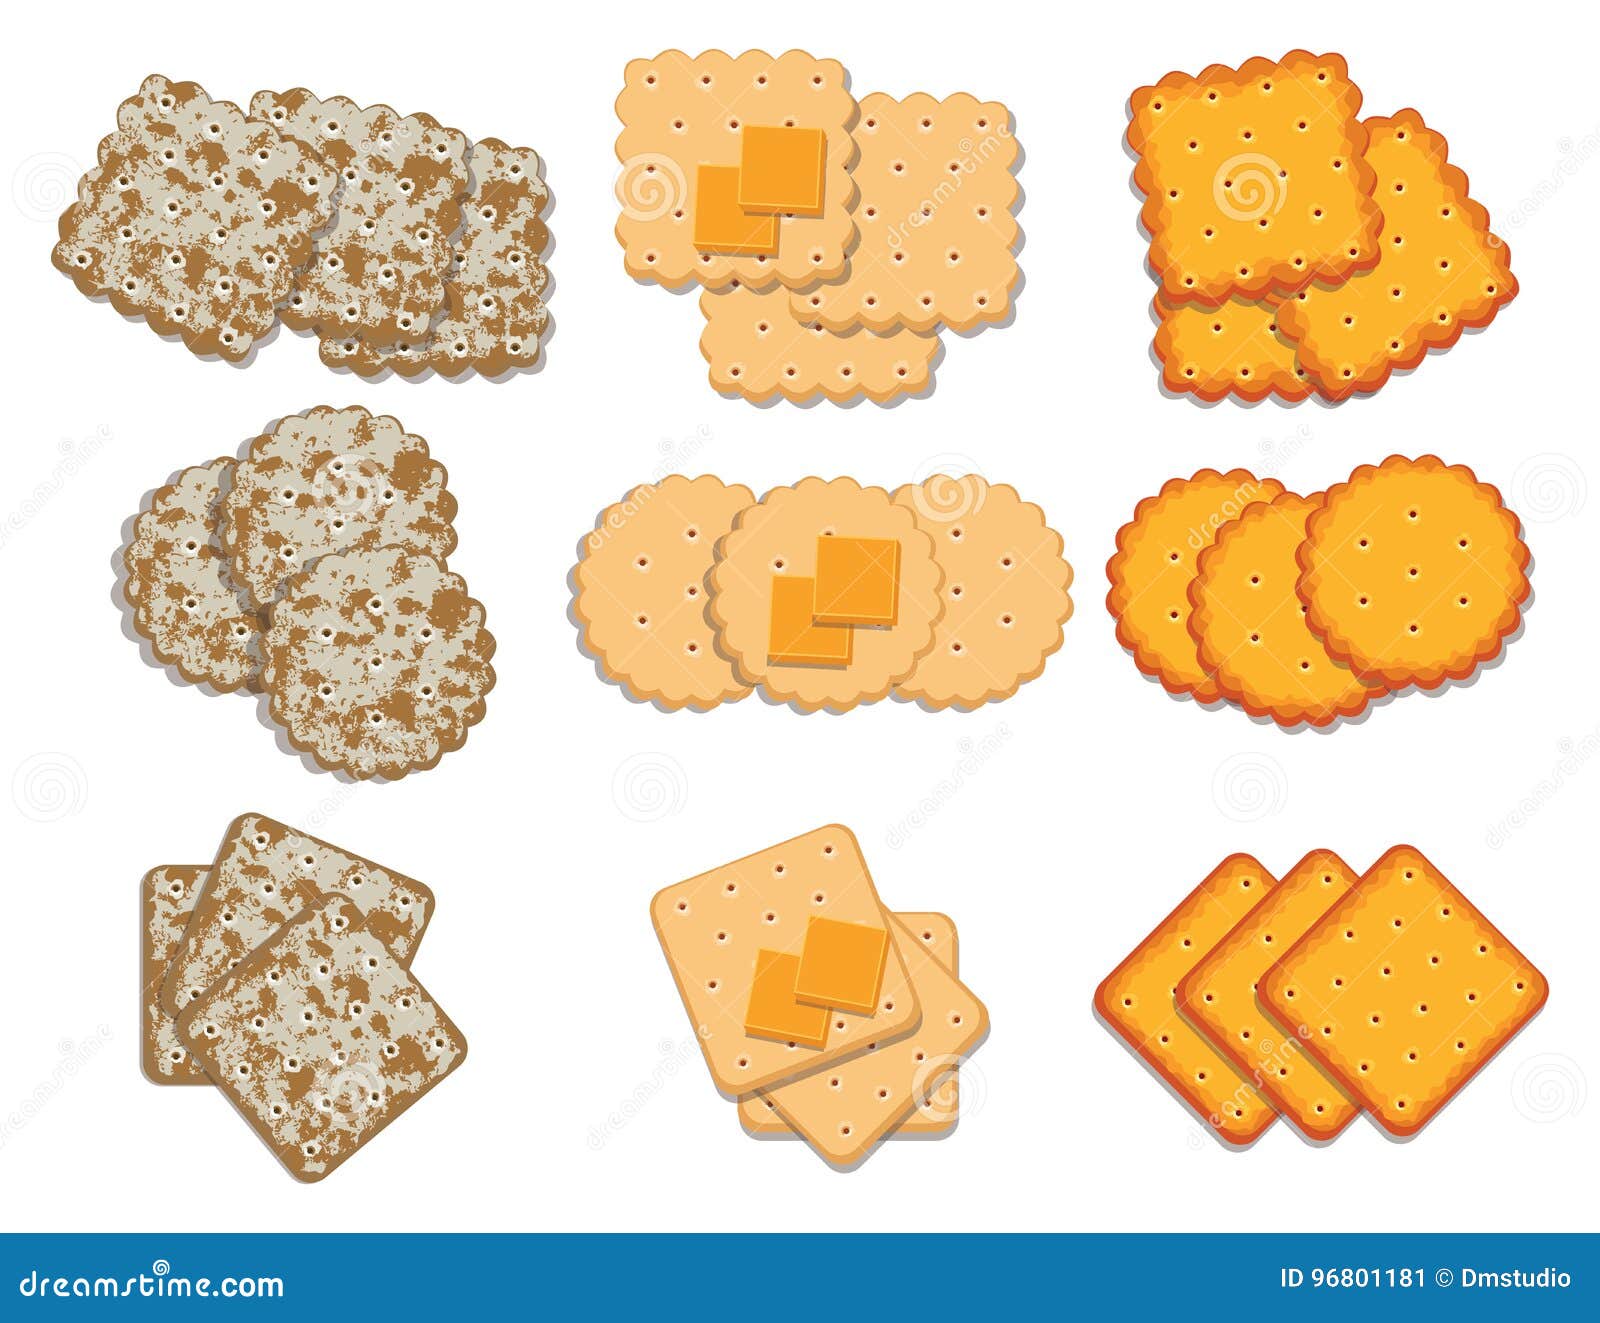 set of cracker chips. 